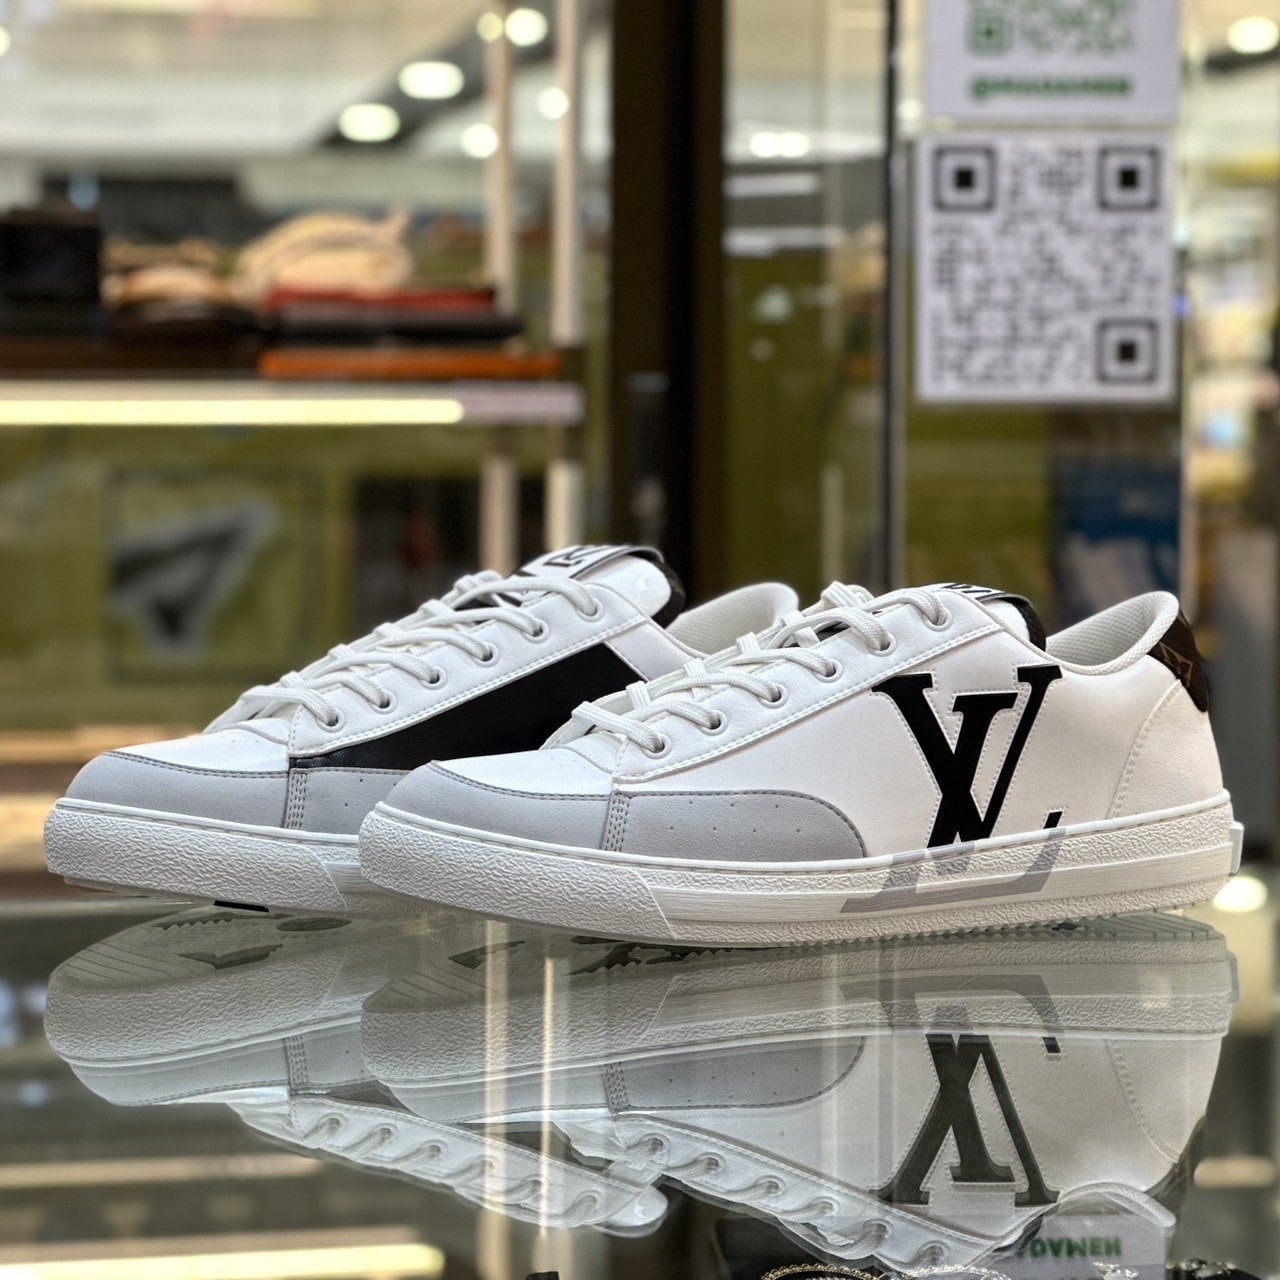 Louis Vuitton's Unisex Charlie Sneakers